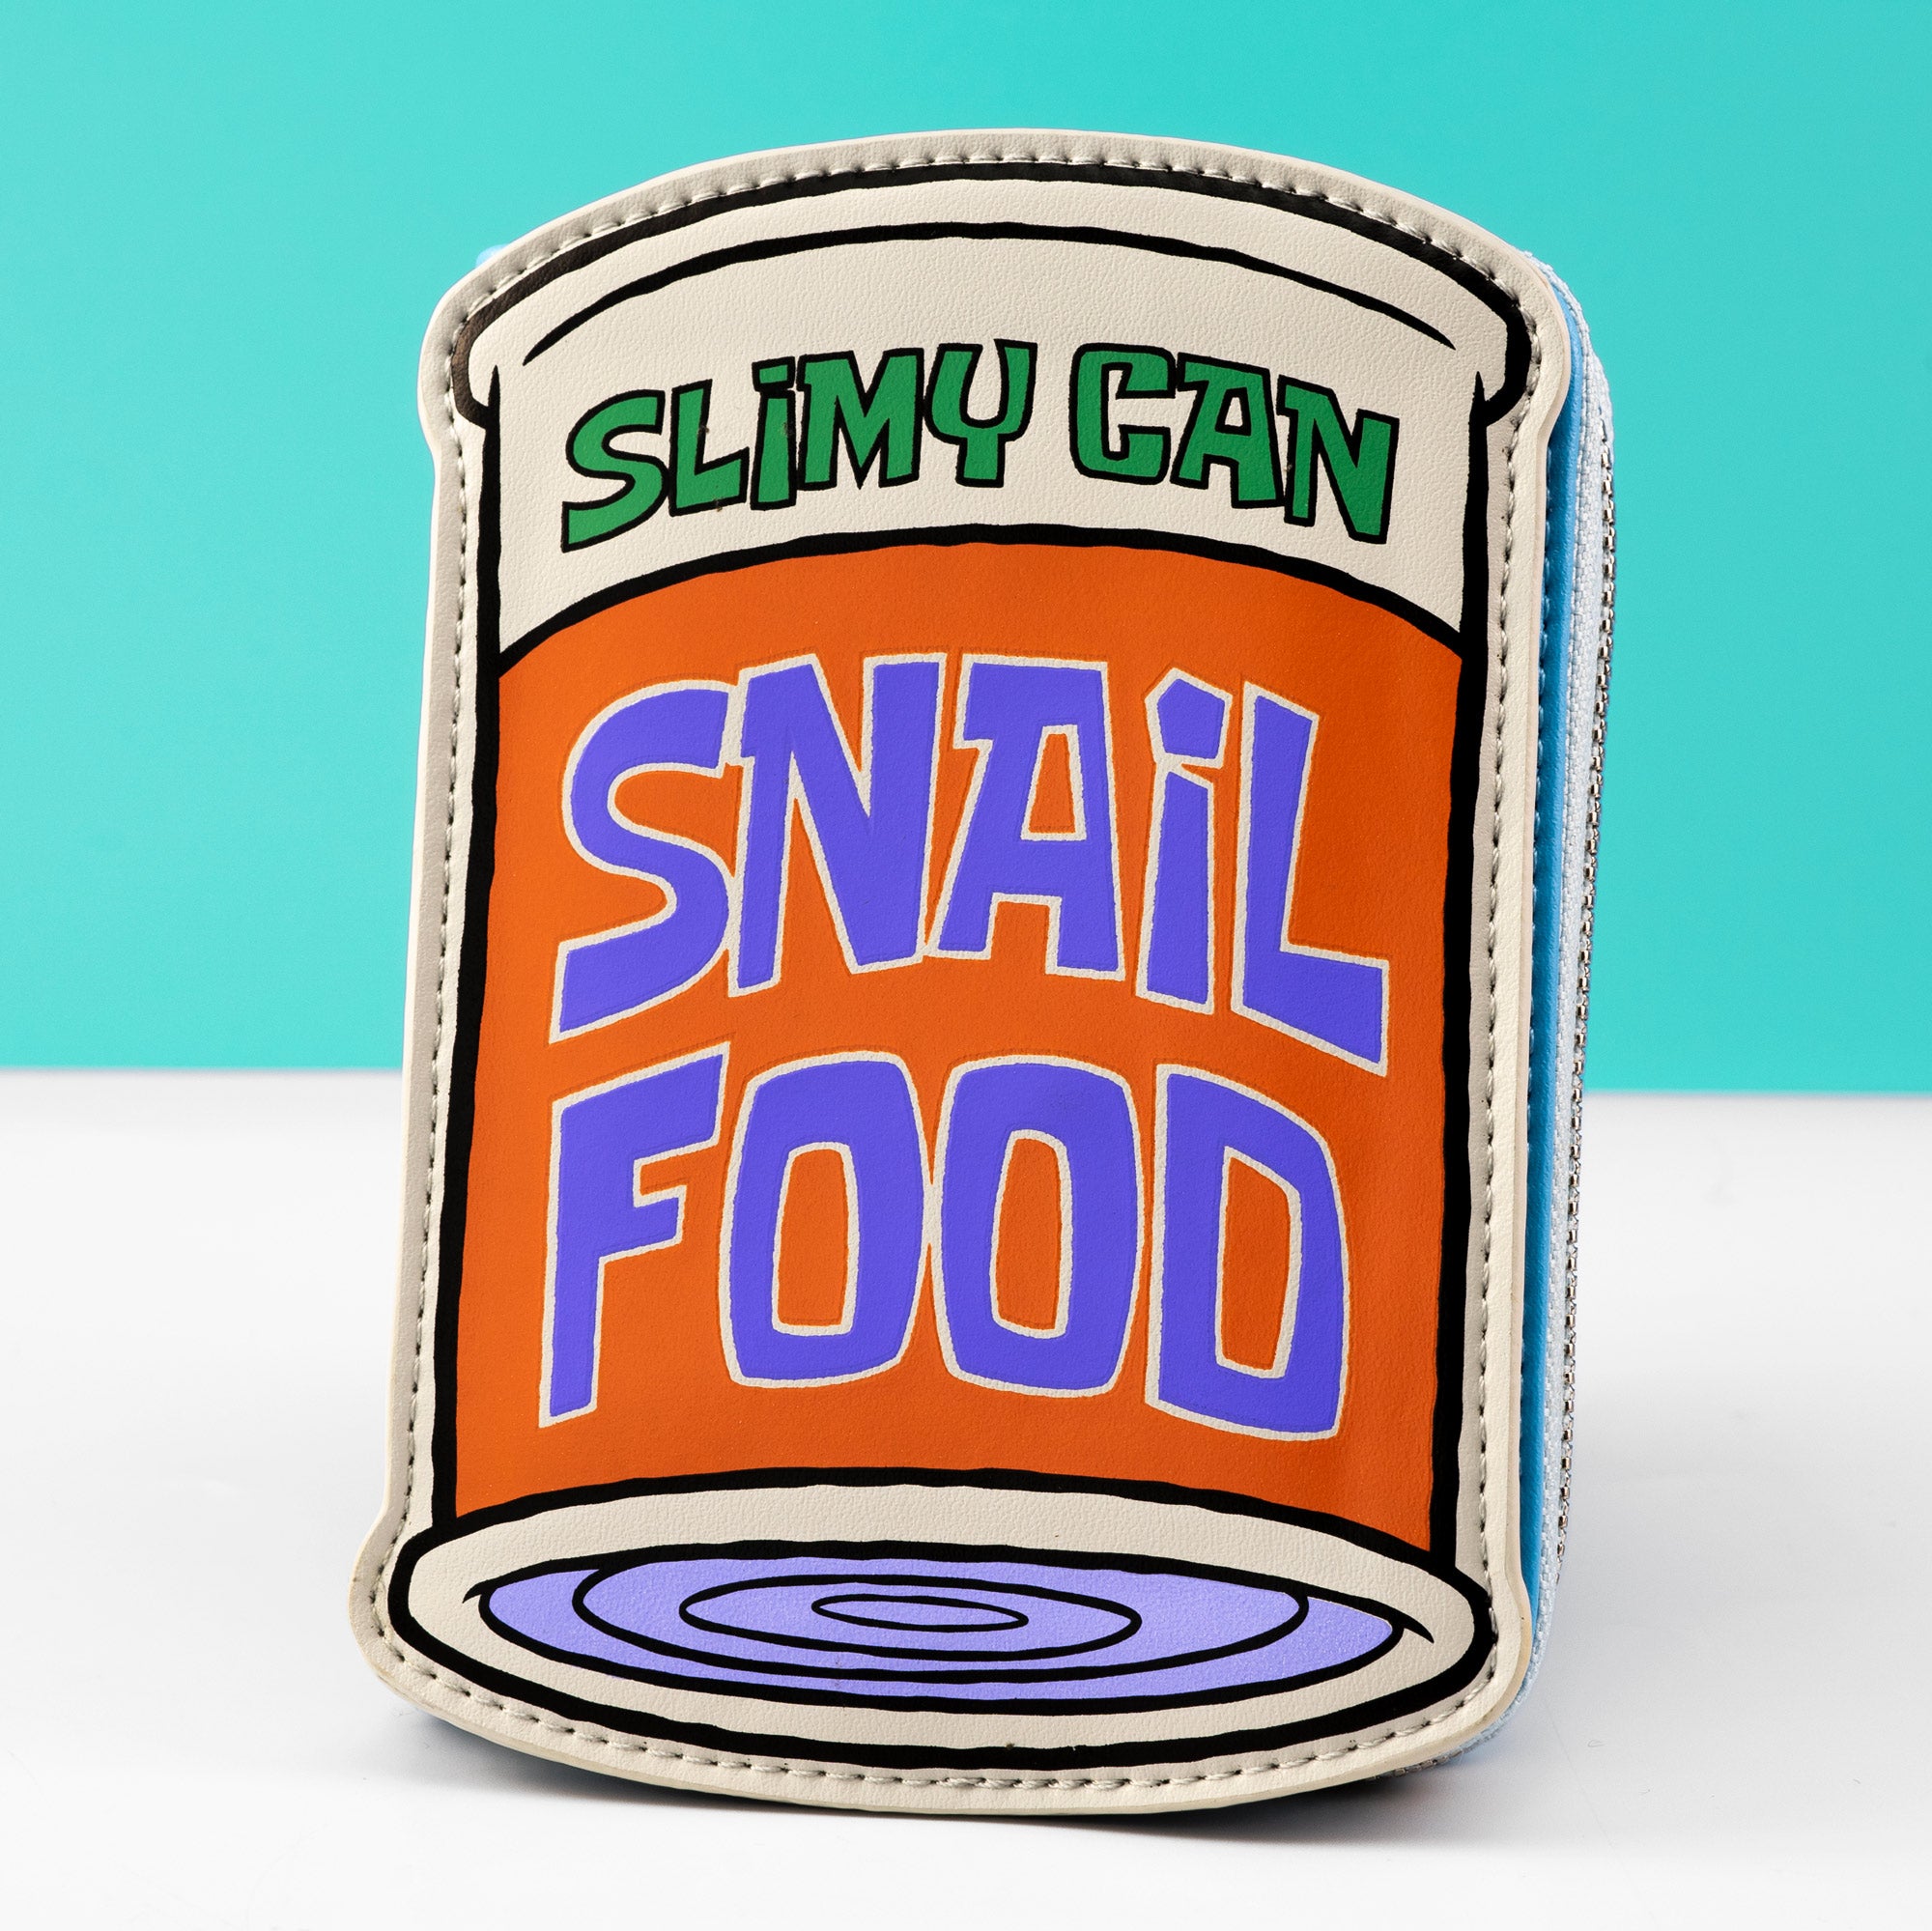 Loungefly x Nickelodeon Spongebob Squarepants Gary Slimy Can Snail Food Wallet